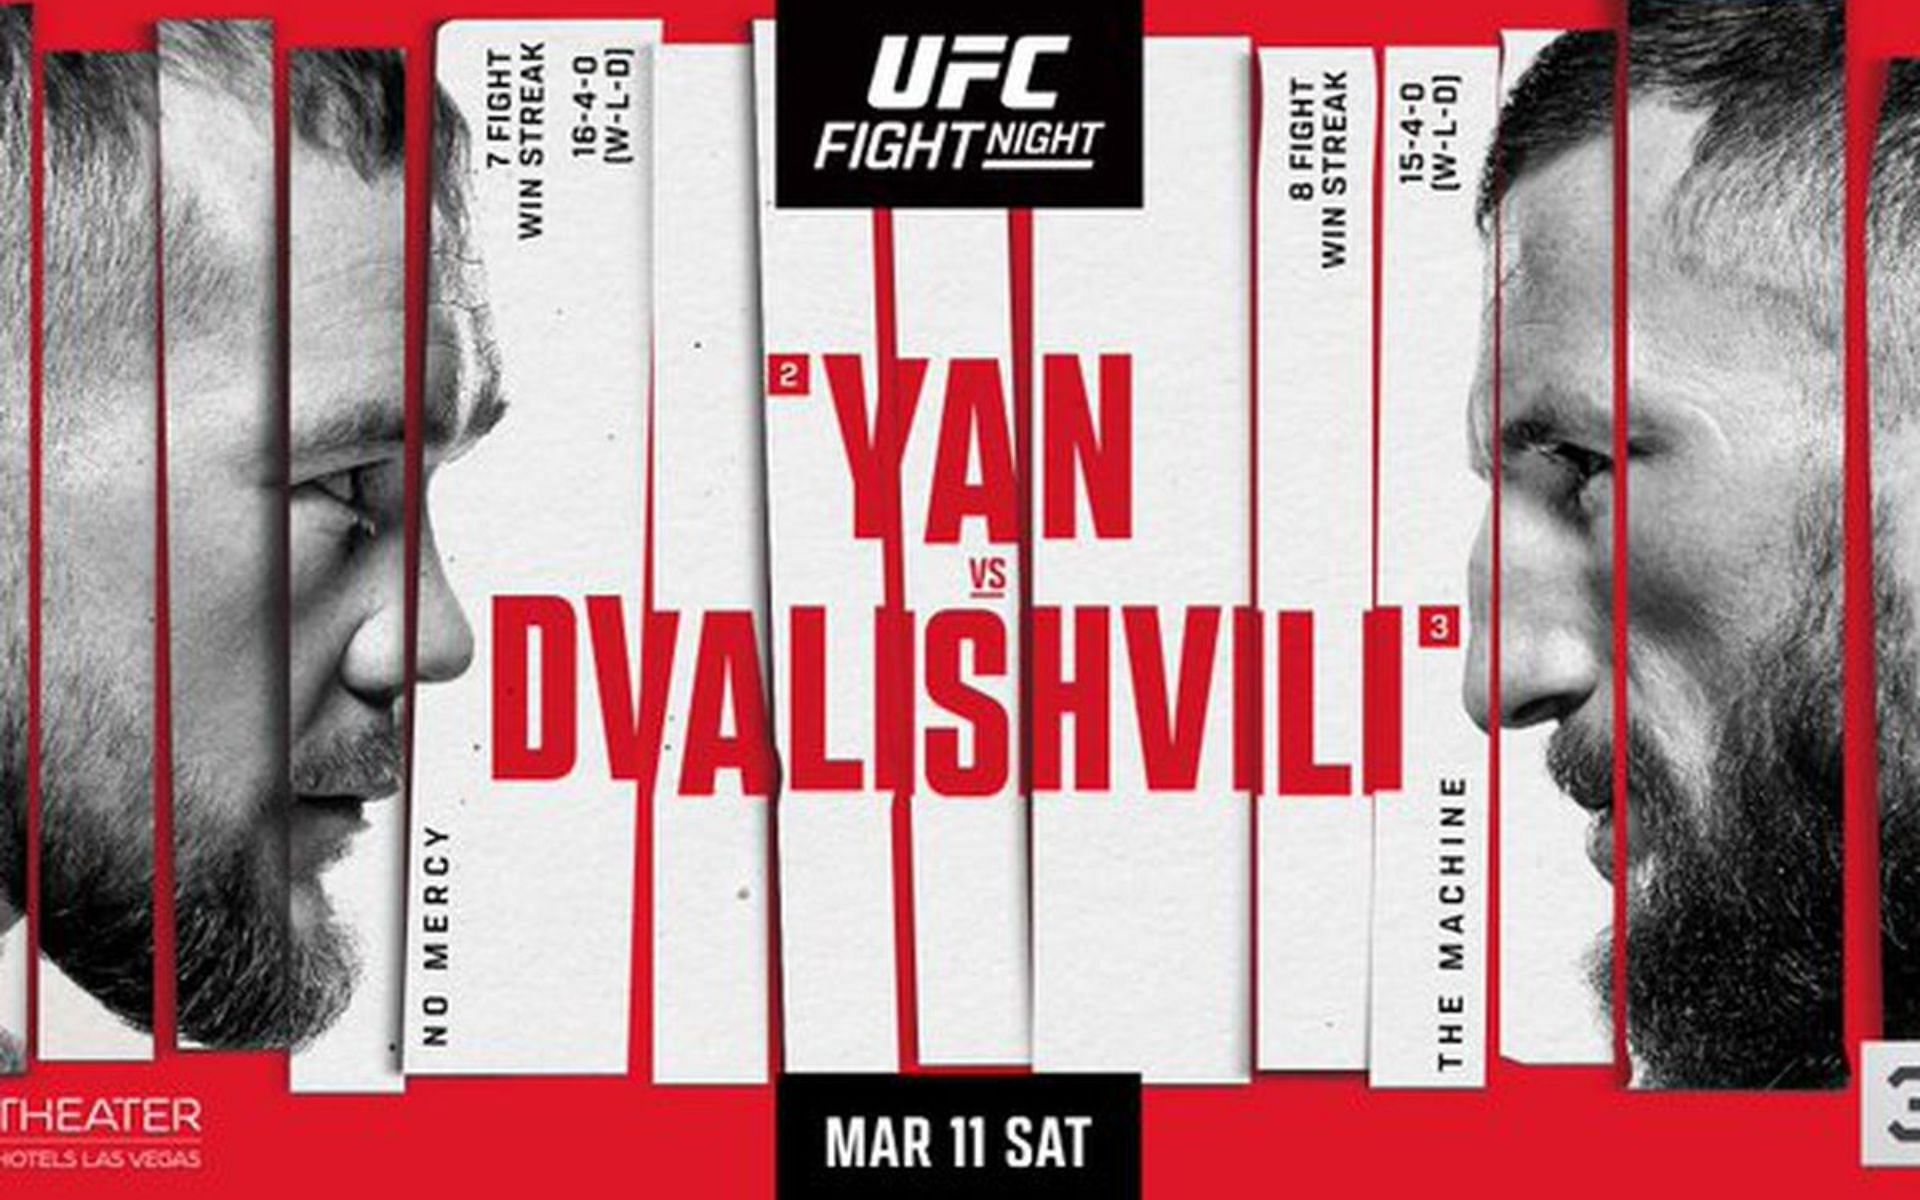 Petr Yan meets Merab Dvalishvili in a major bantamweight clash this weekend